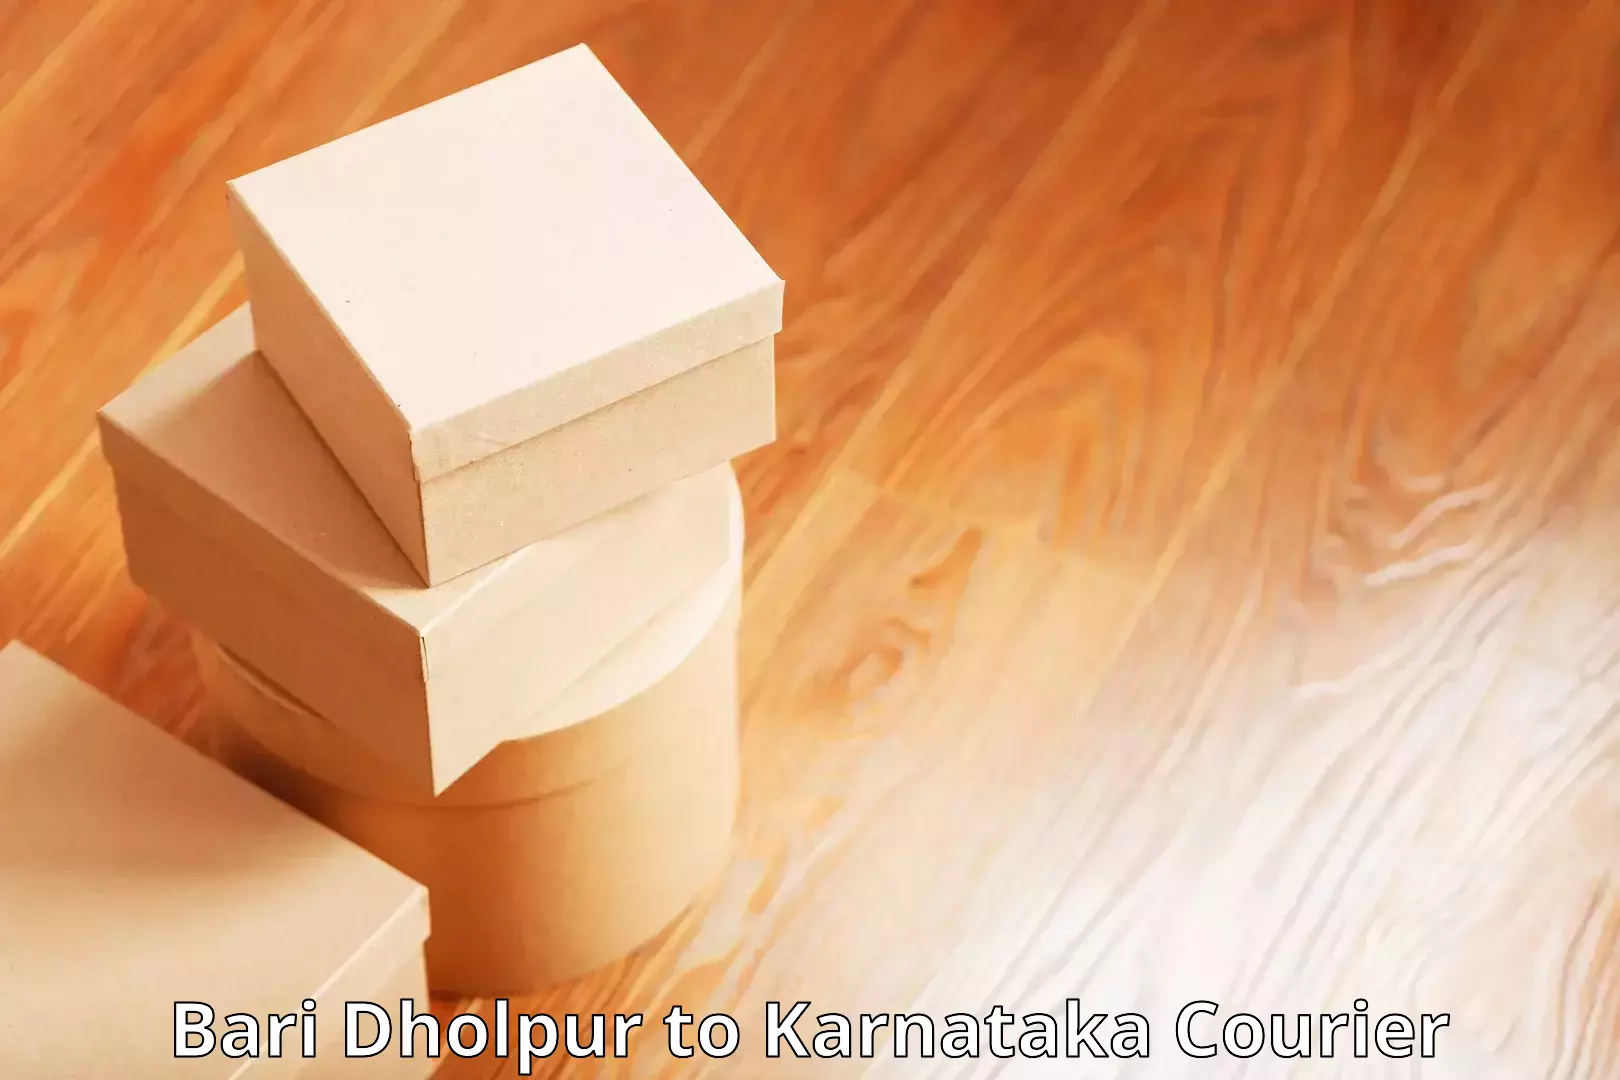 Courier service innovation Bari Dholpur to Karnataka